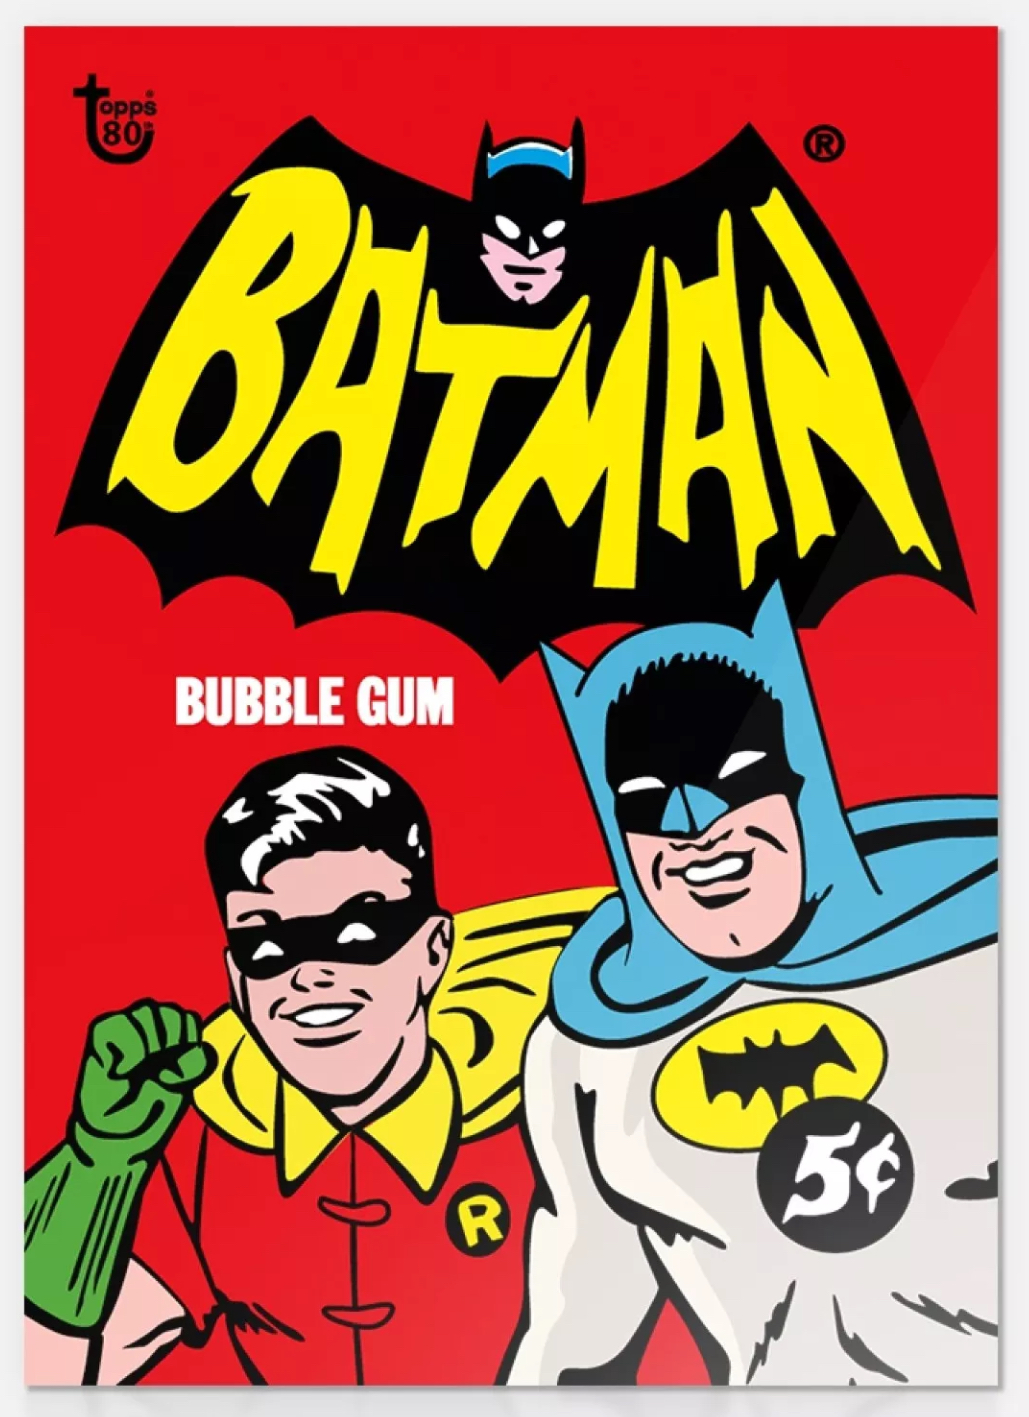 2018 Topps 80th Anniversary Wrapper Art - Batman